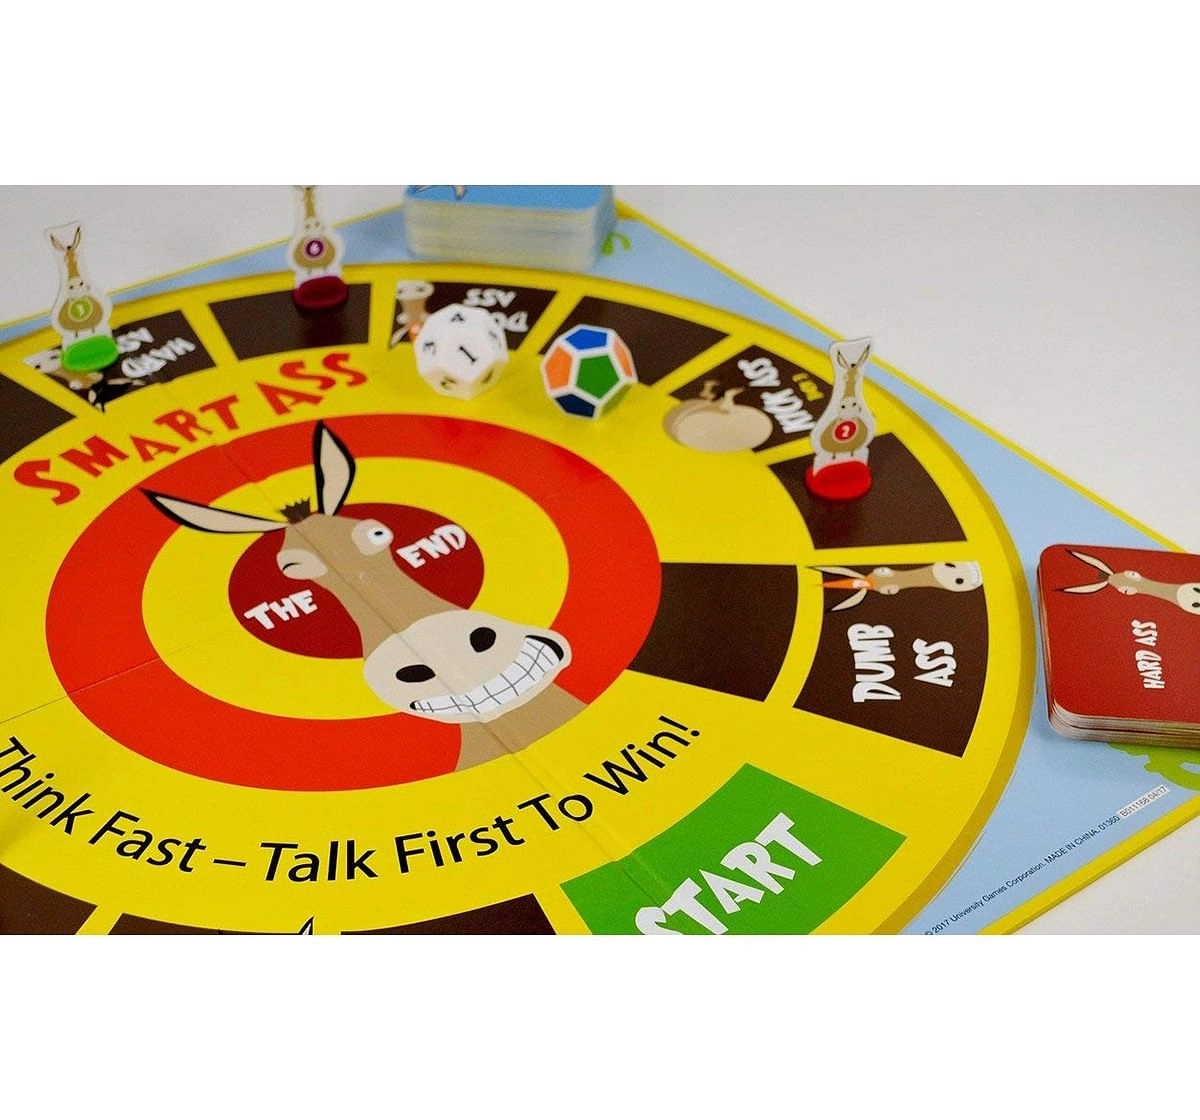 Funskool Smart Ass Board Game  for Kids age 12Y+ 